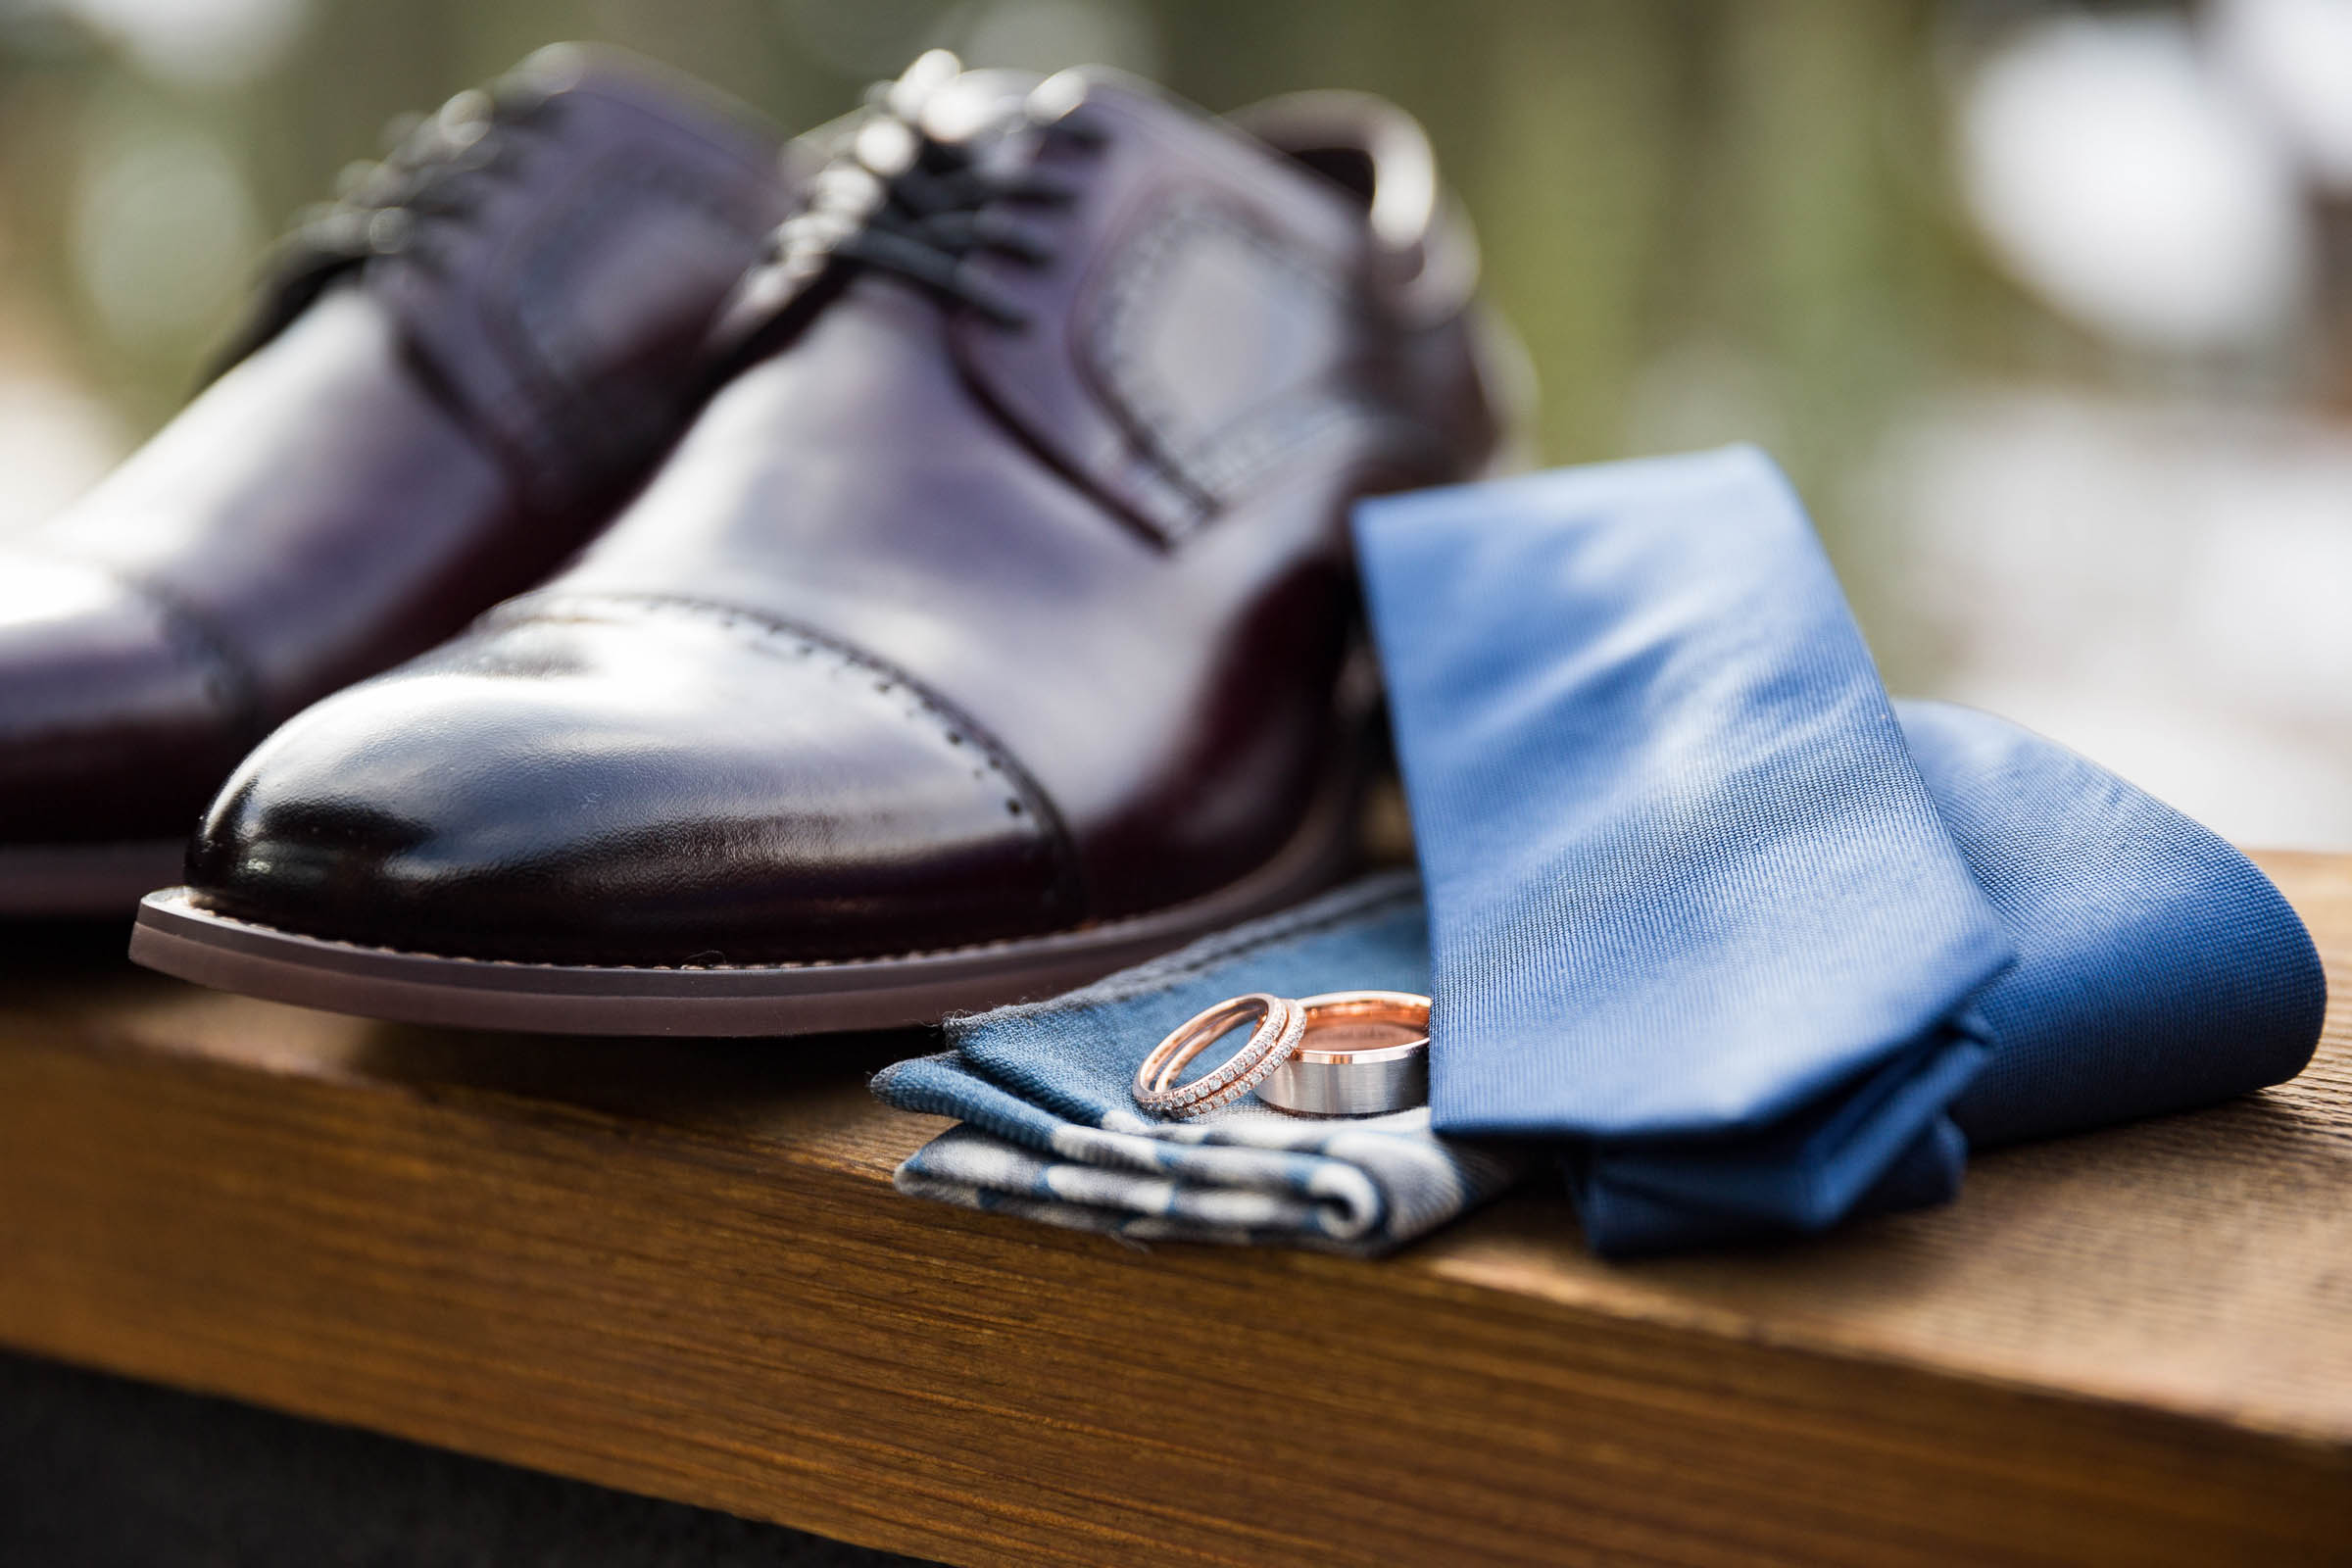 Grooms dark shoes and cobalt blue tie